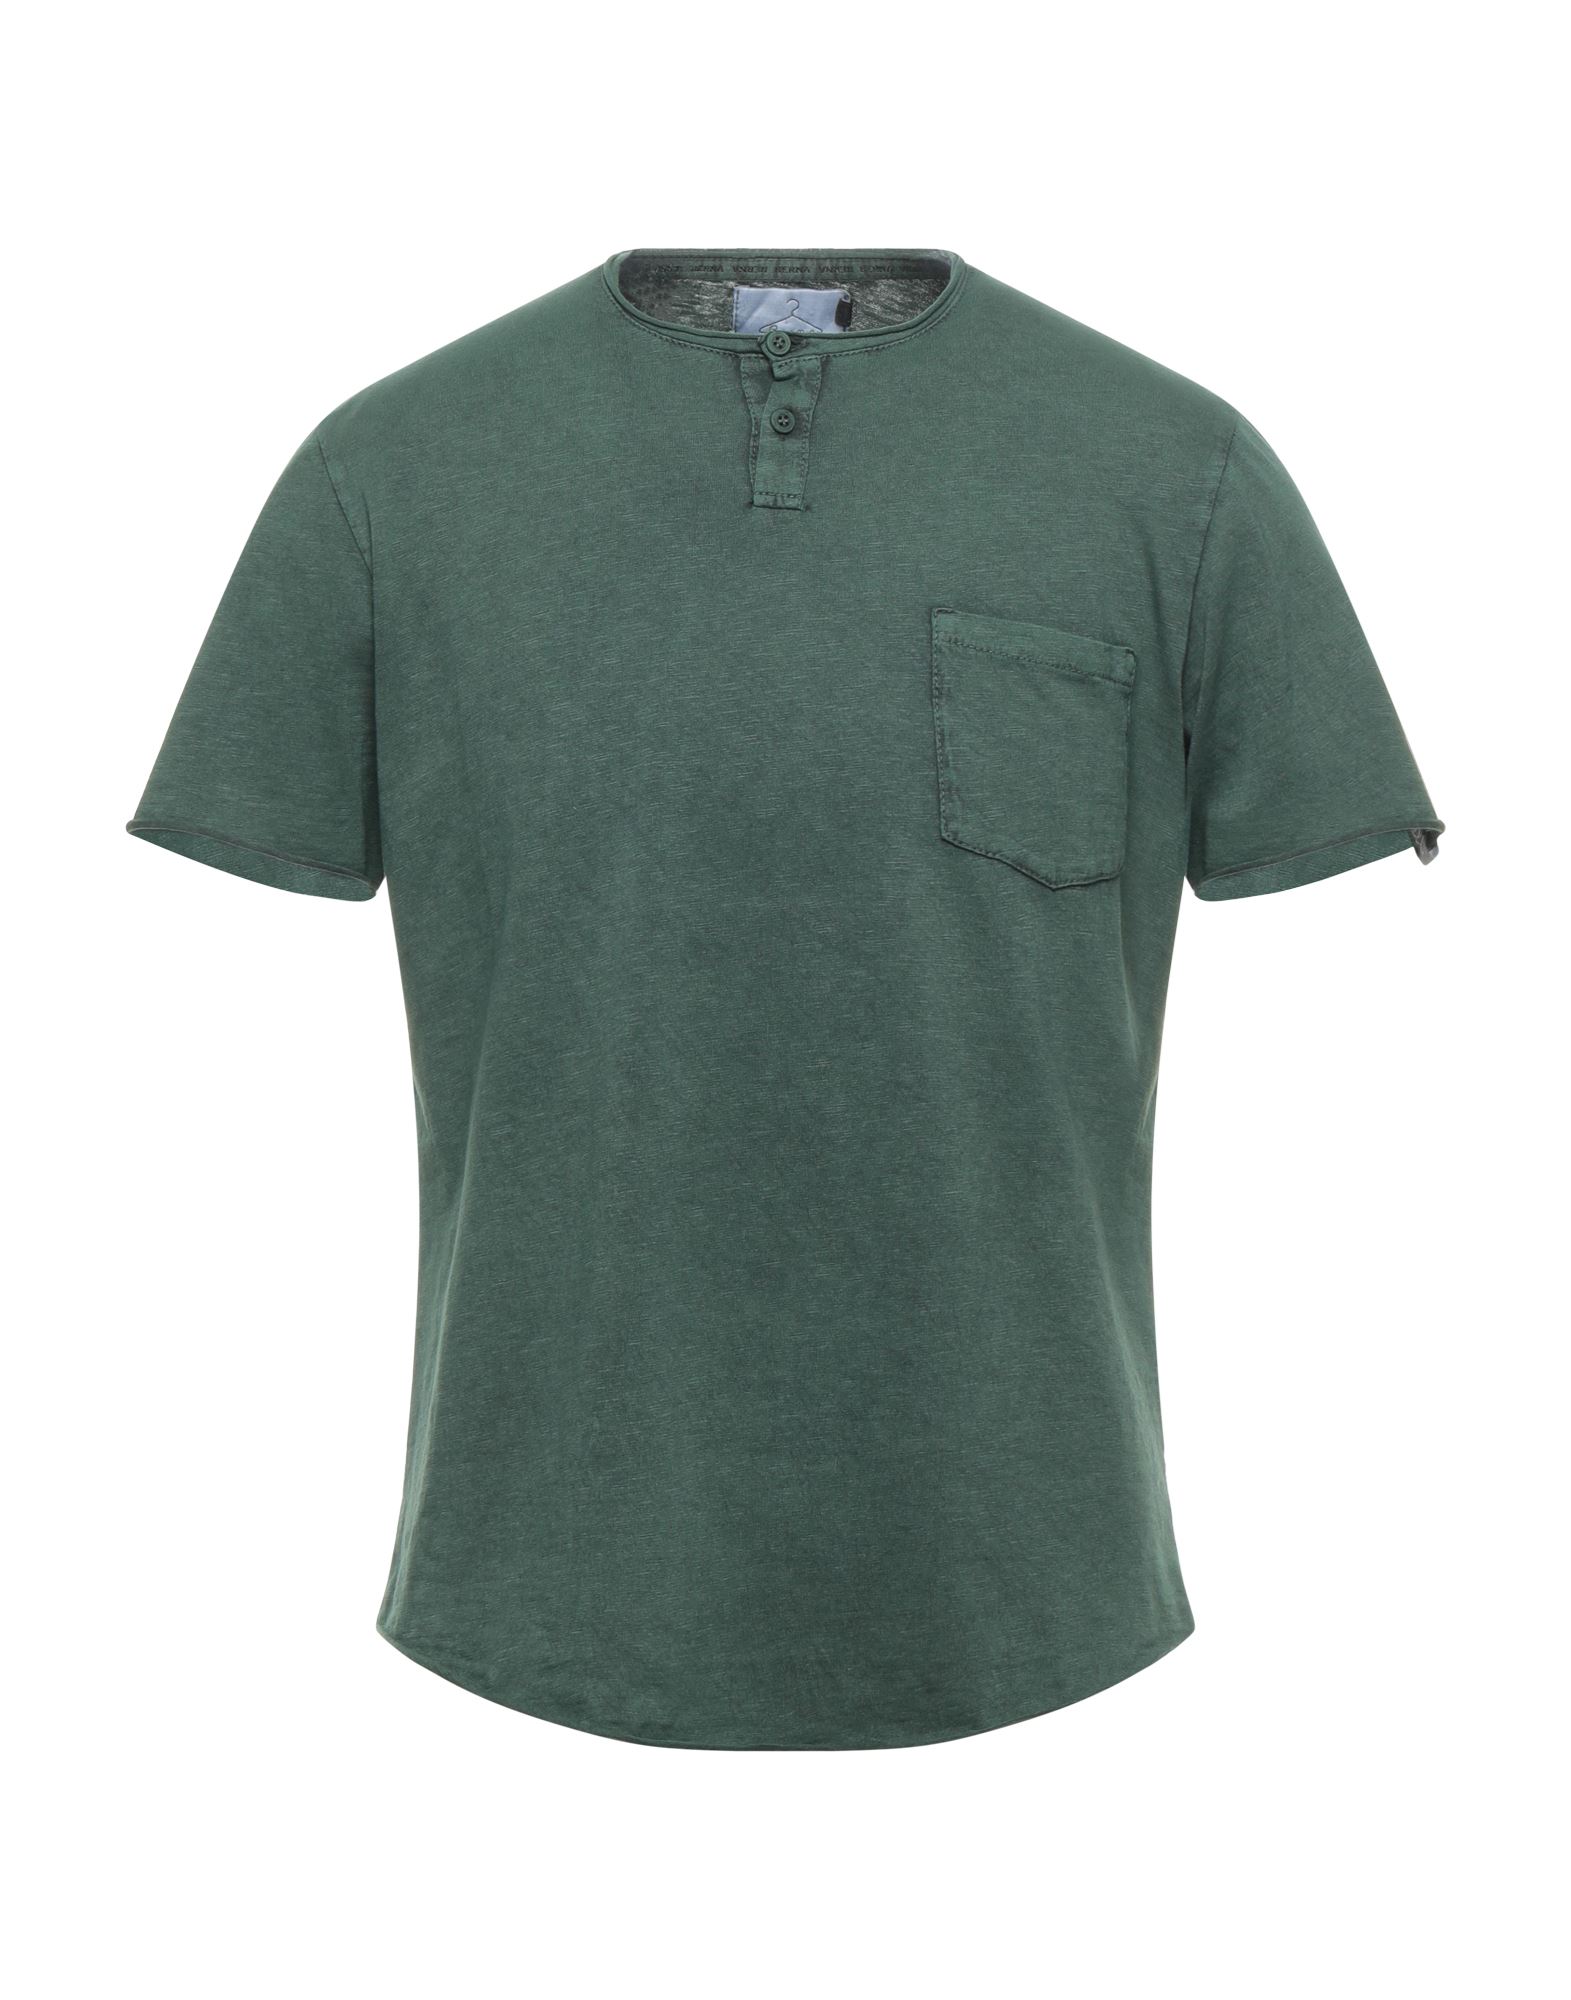 Berna T-shirts In Military Green